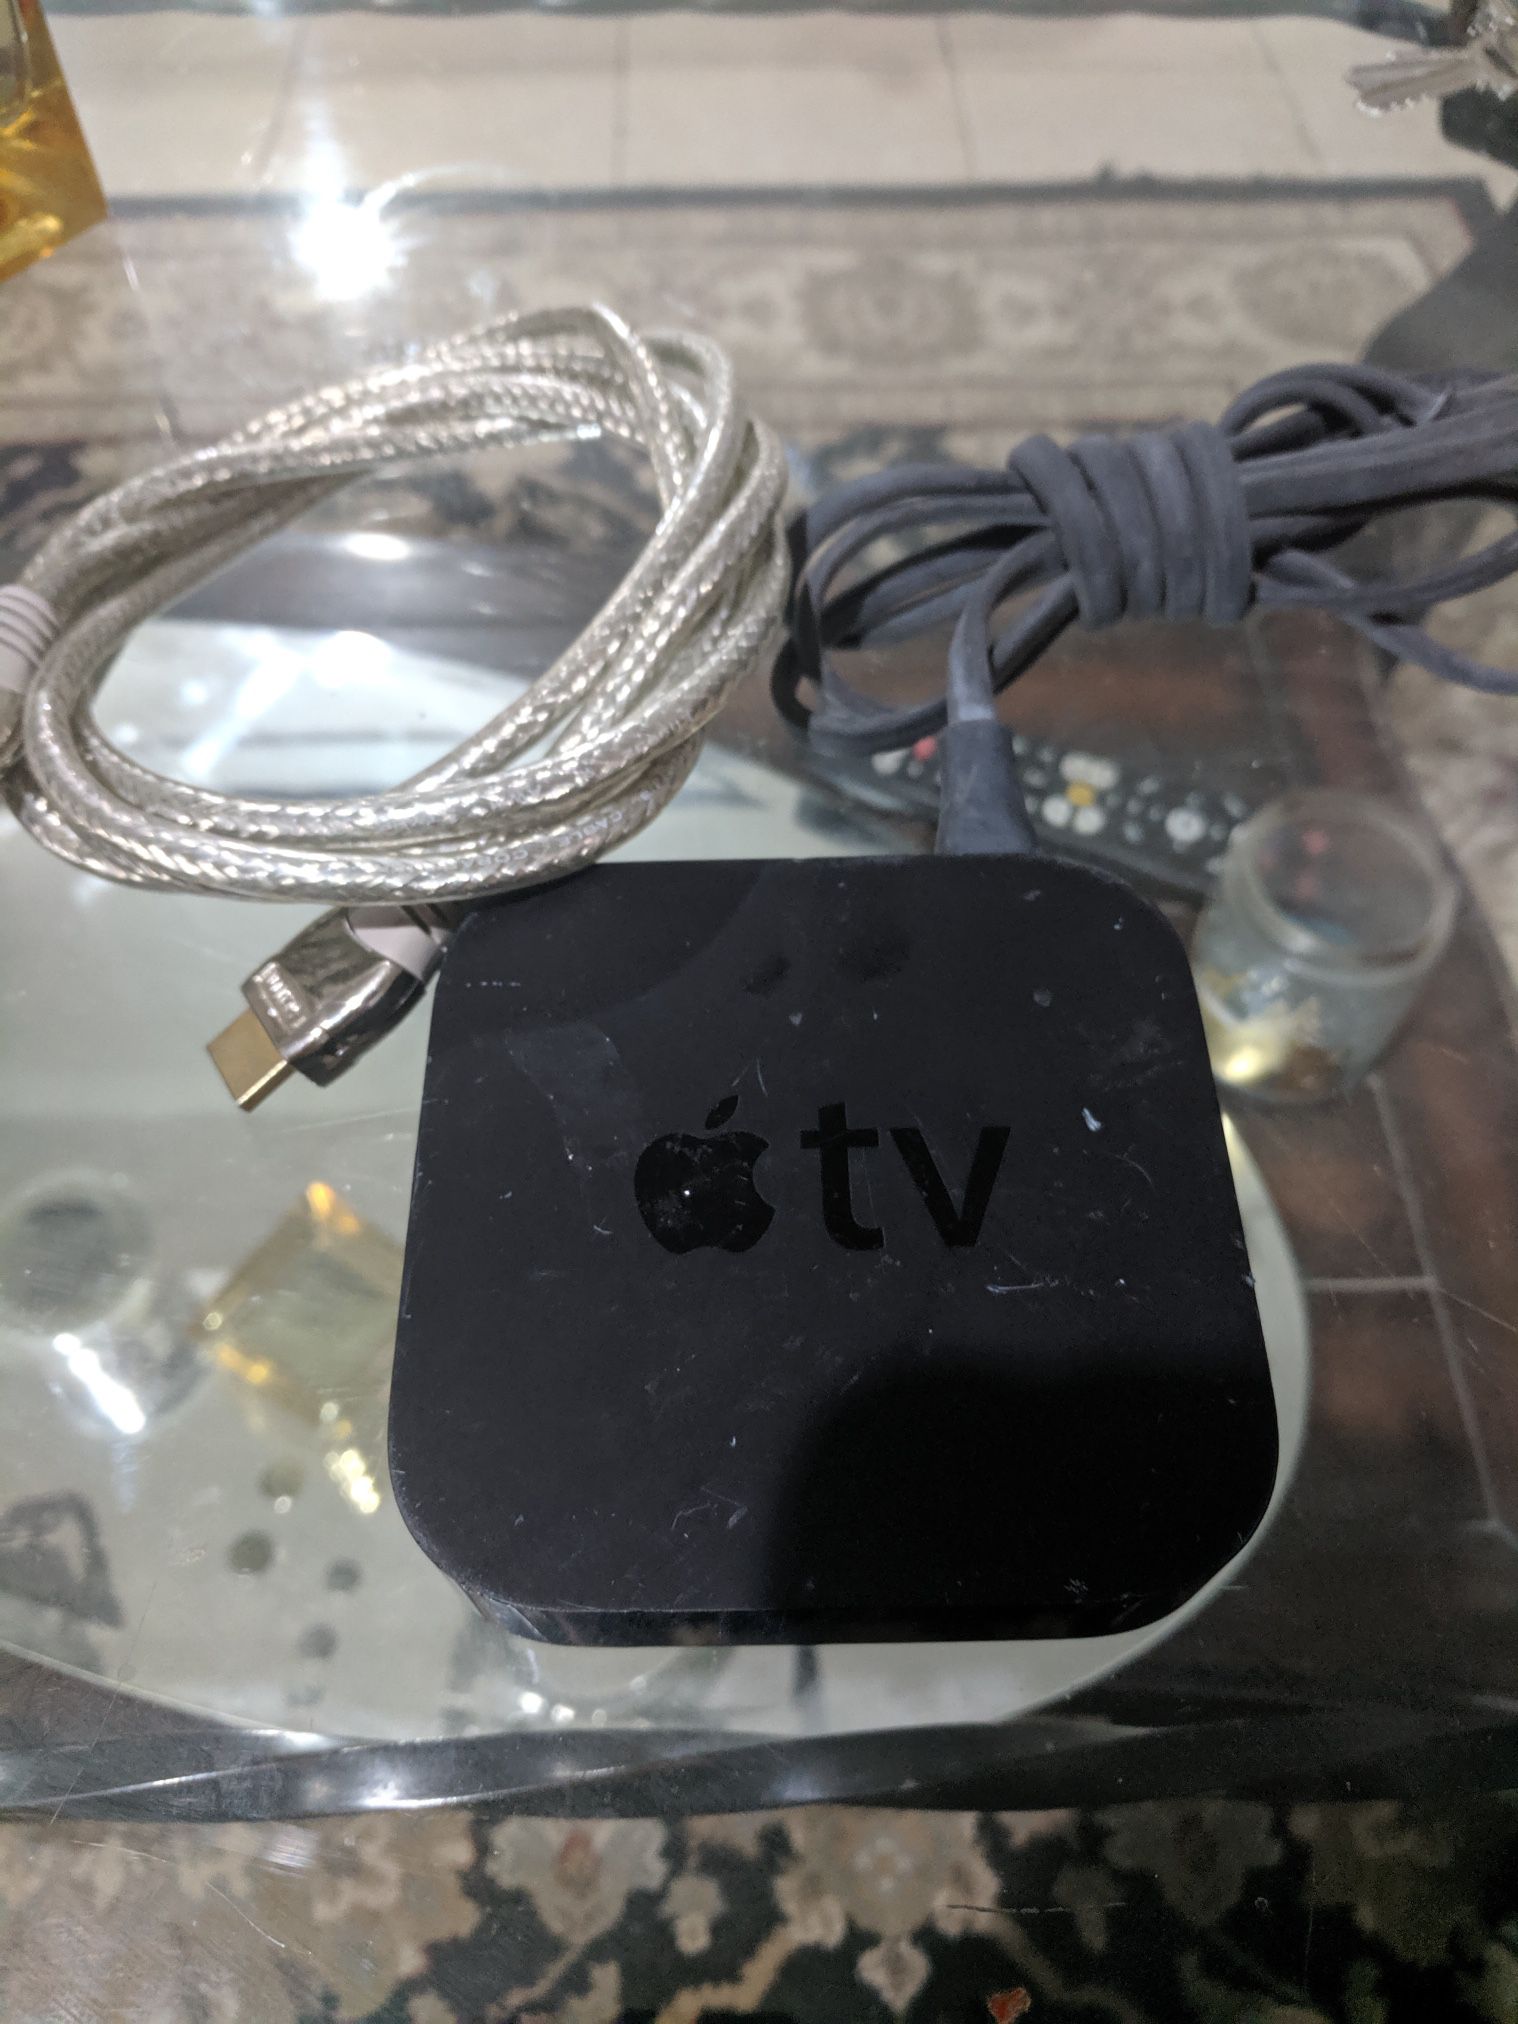 Apple TV Generacion 3 